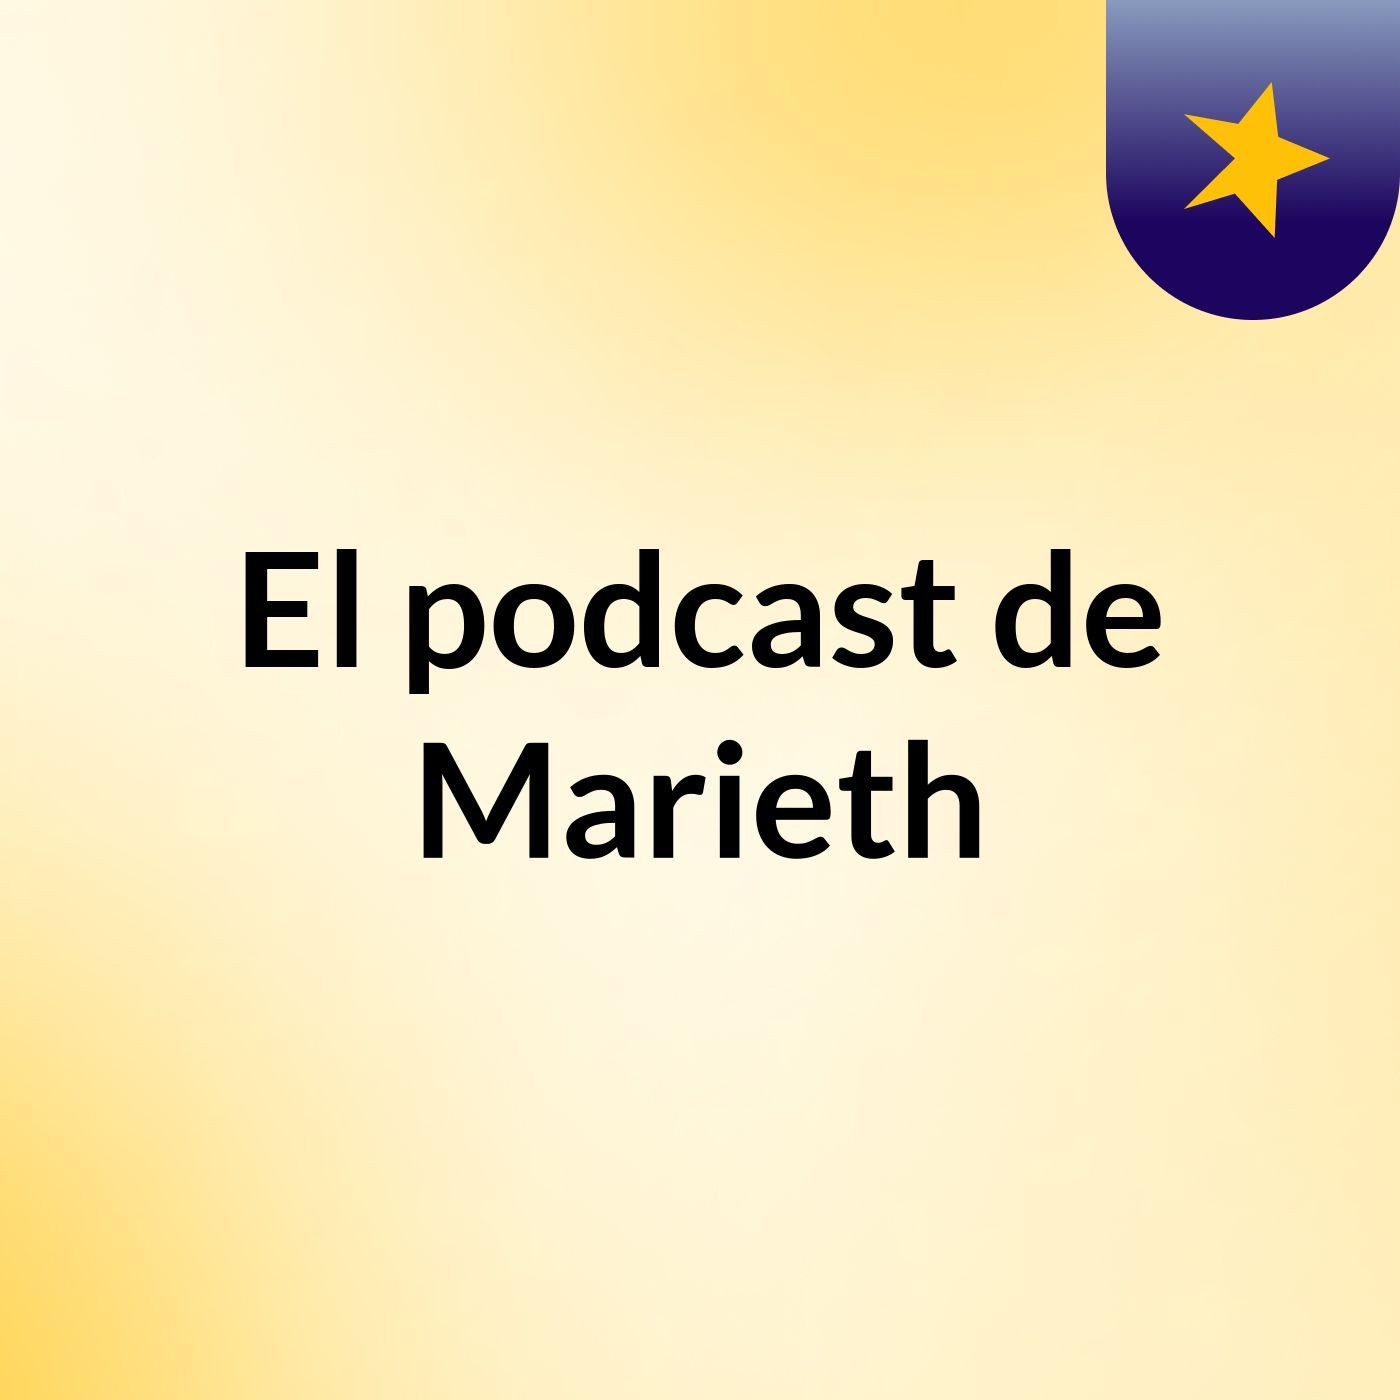 El podcast de Marieth